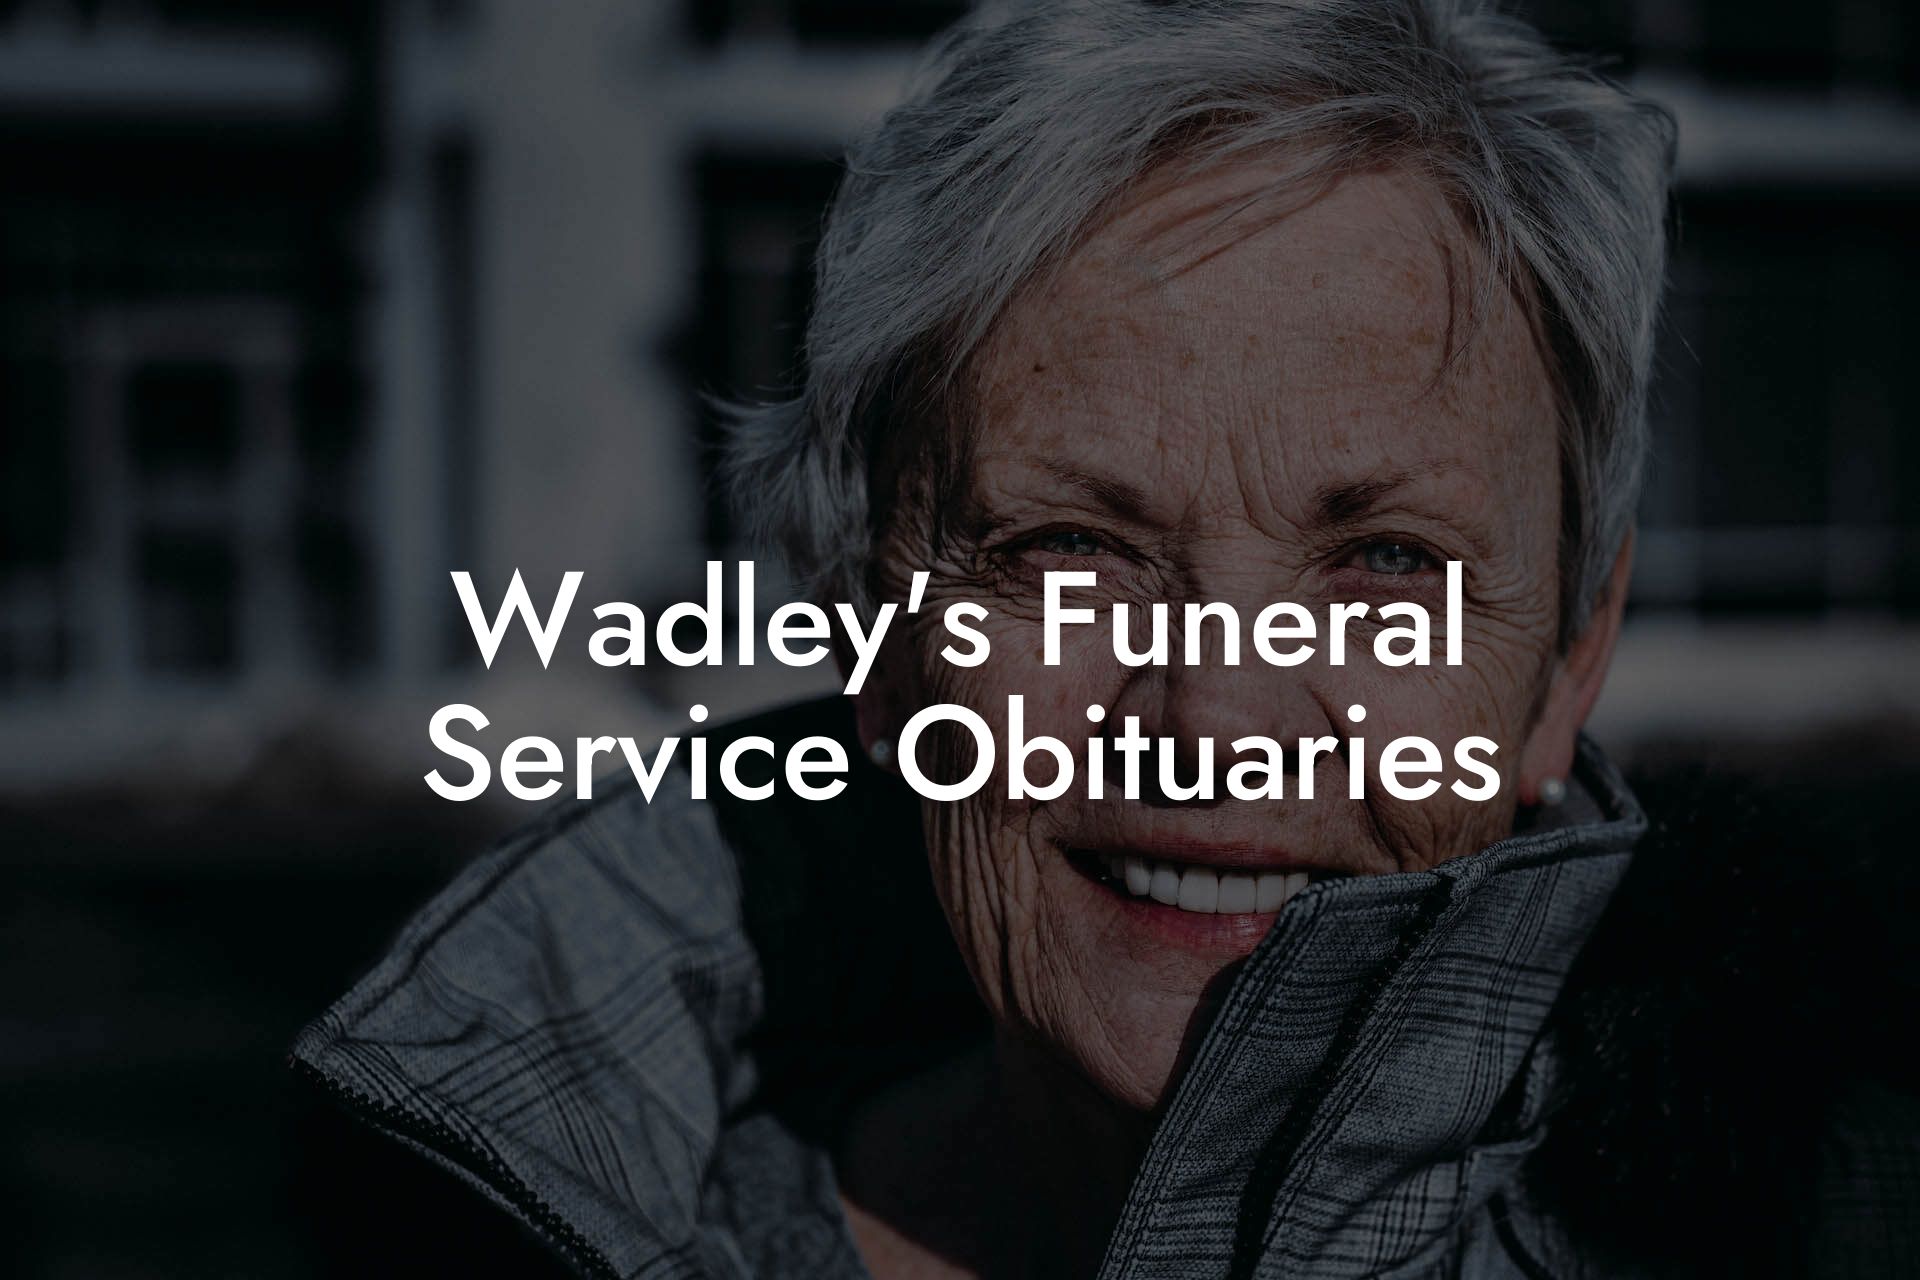 Wadley's Funeral Service Obituaries